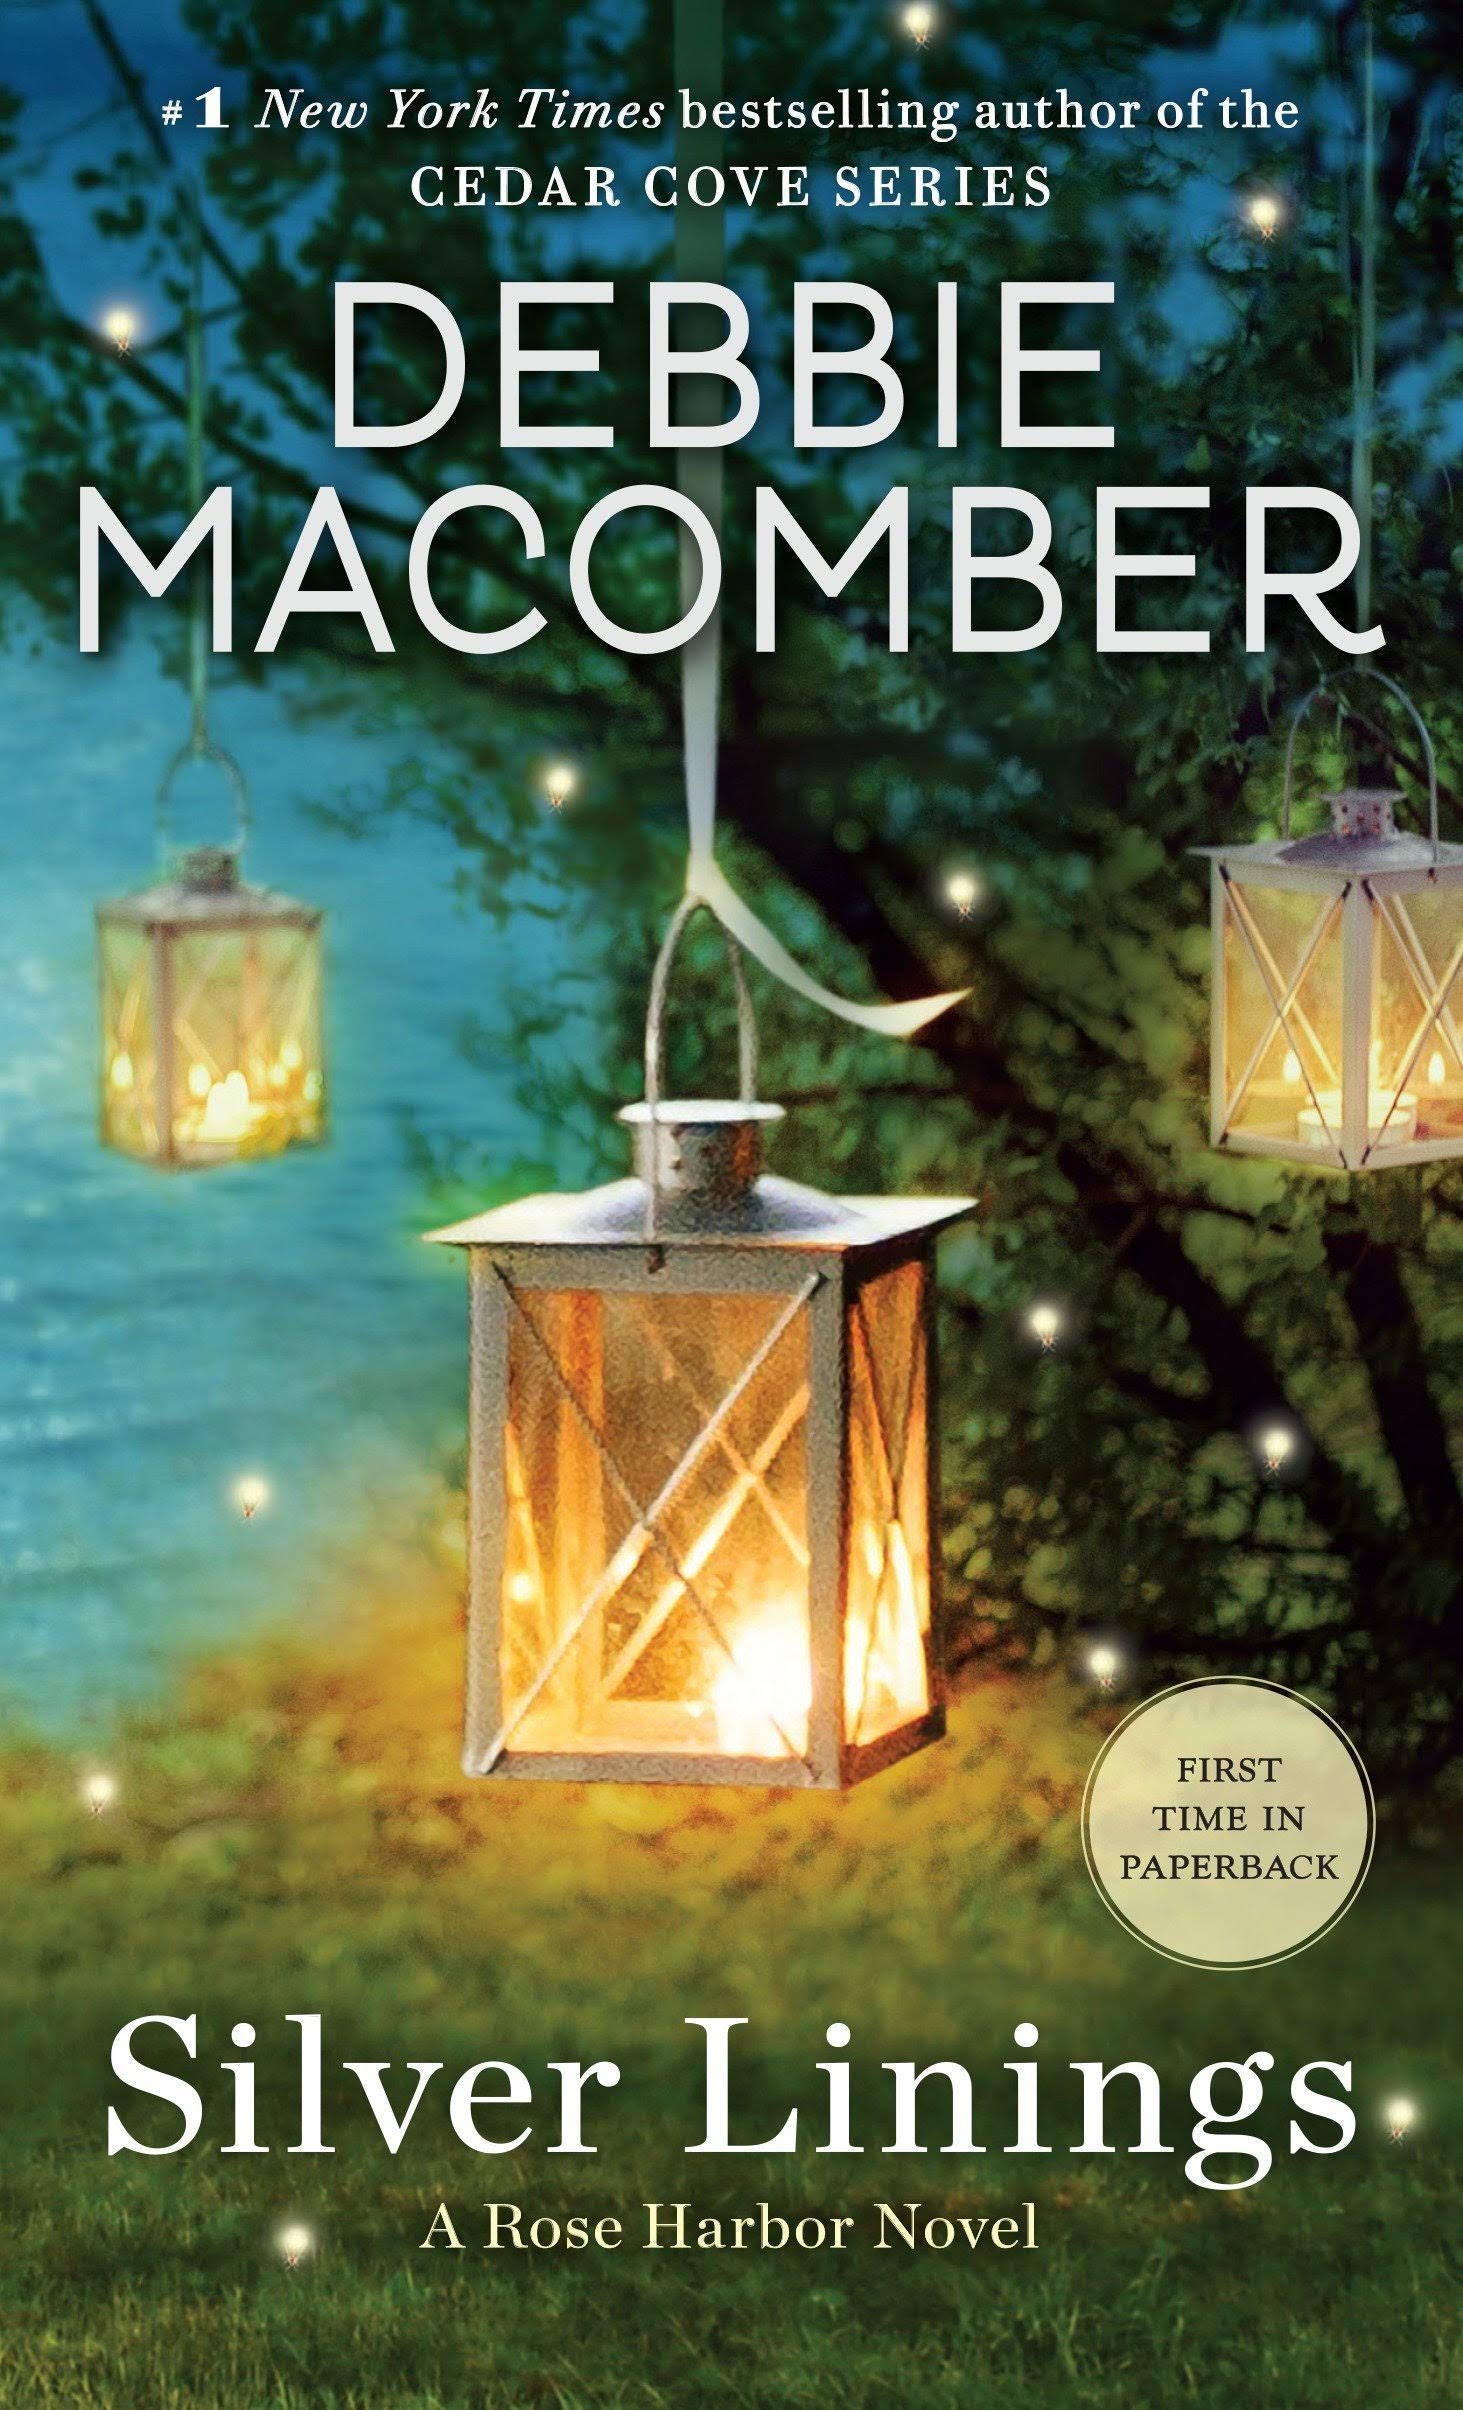 Silver Linings: A Rose Harbor Novel - Debbie Macomber